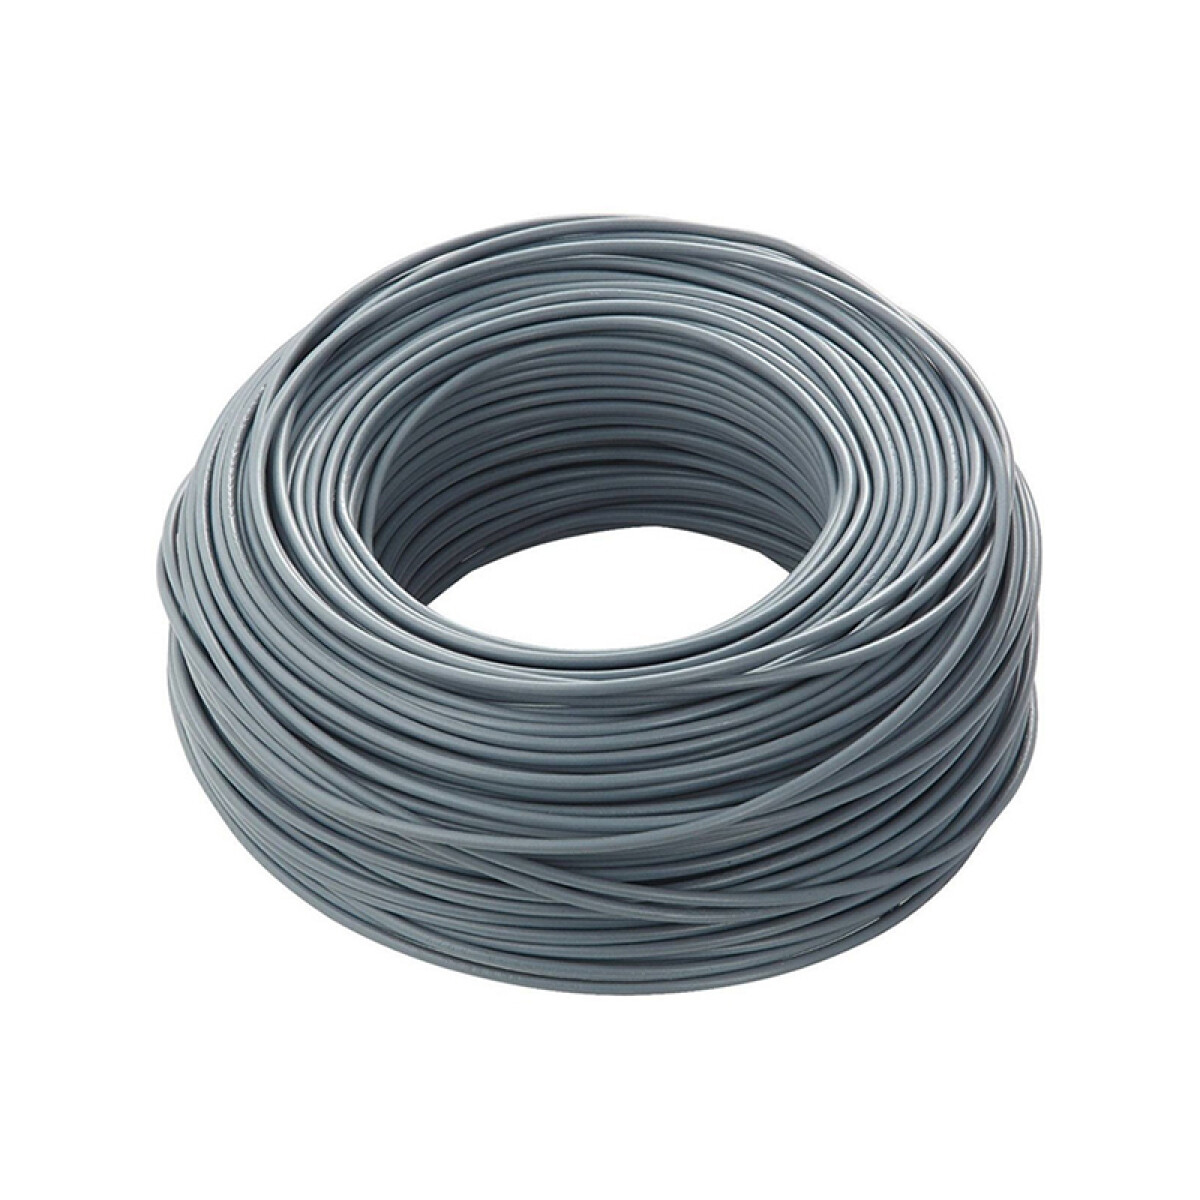 Cable bajo plástico gris 3x4mm² - Rollo 100 mts. - N04410 